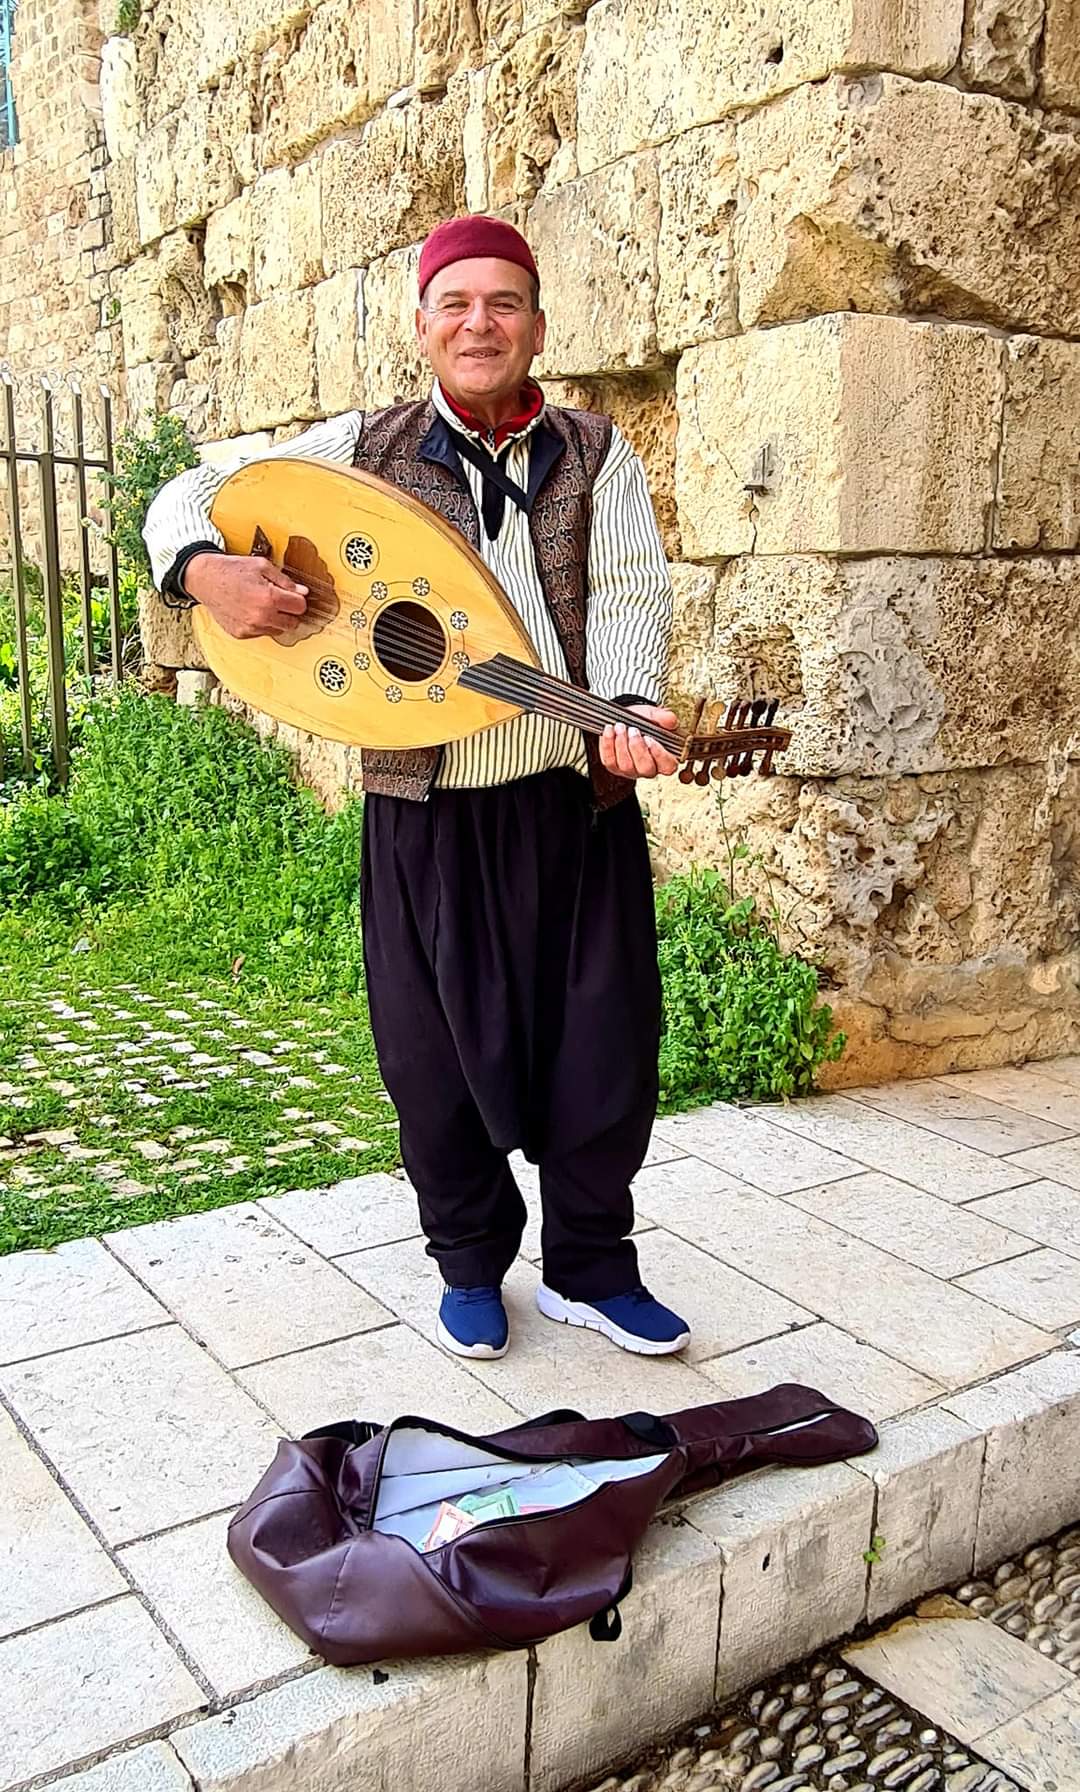 A local musician in Byblos, Lebanon